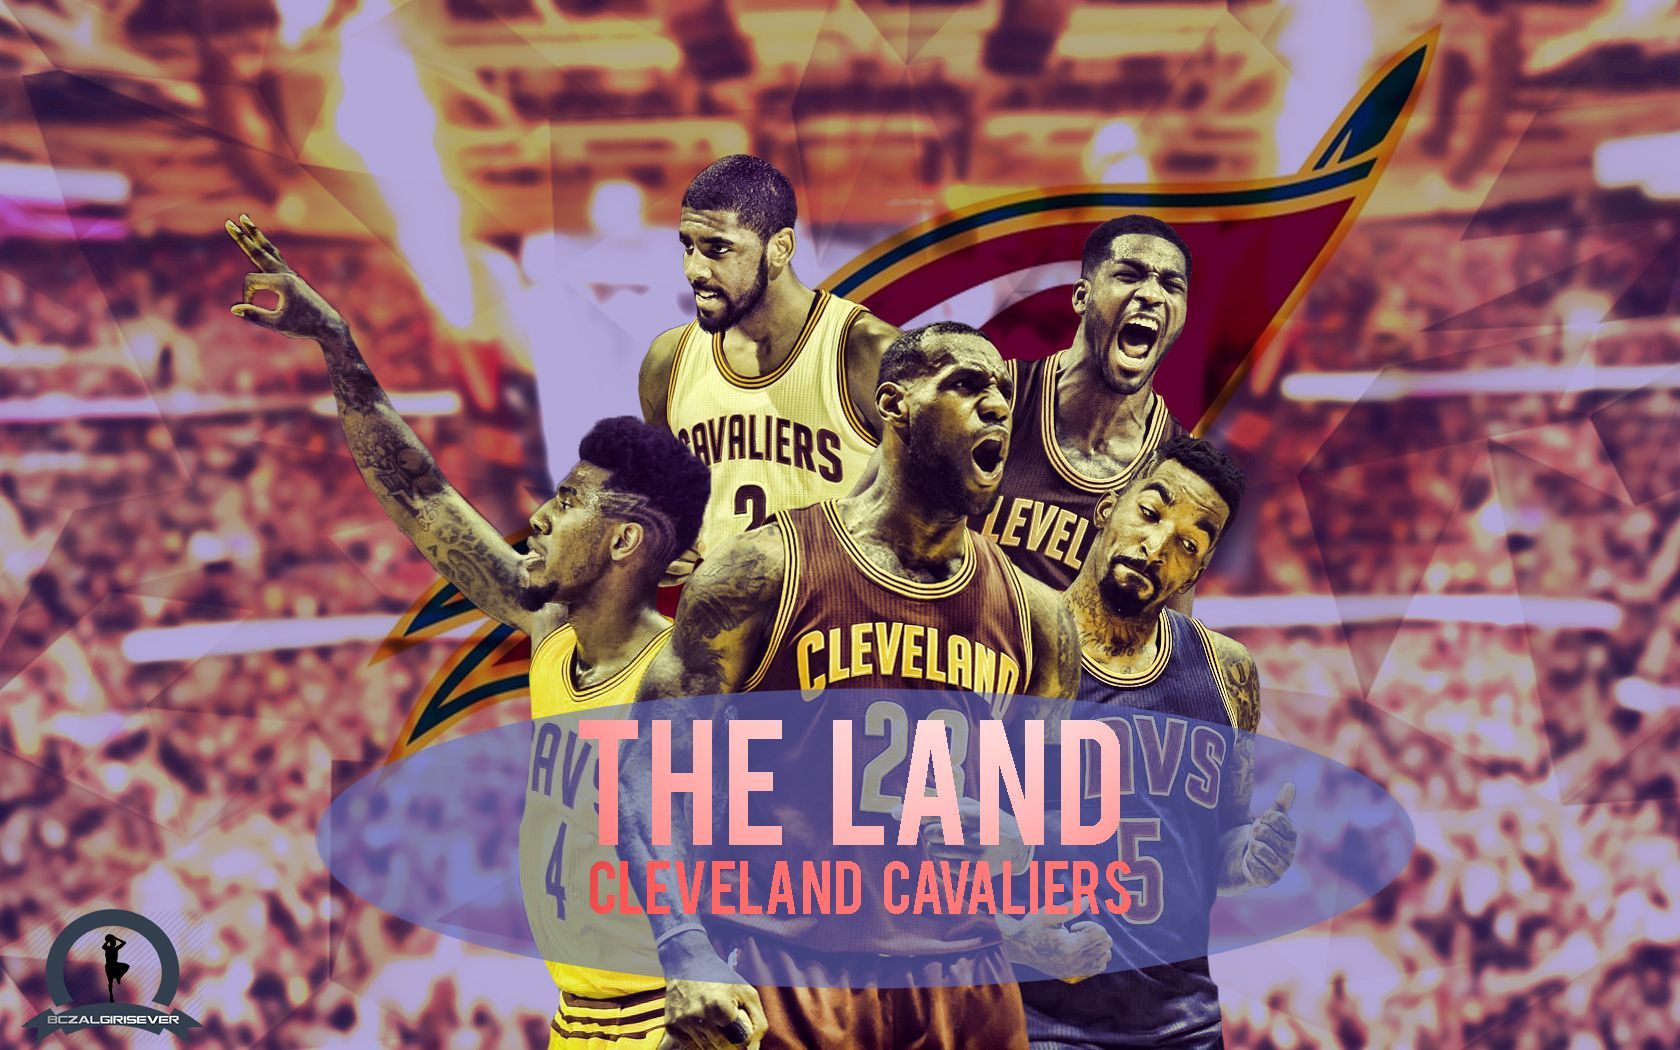 Cleveland Cavaliers wallpaper 2015 by BcZalgirisEver on DeviantArt